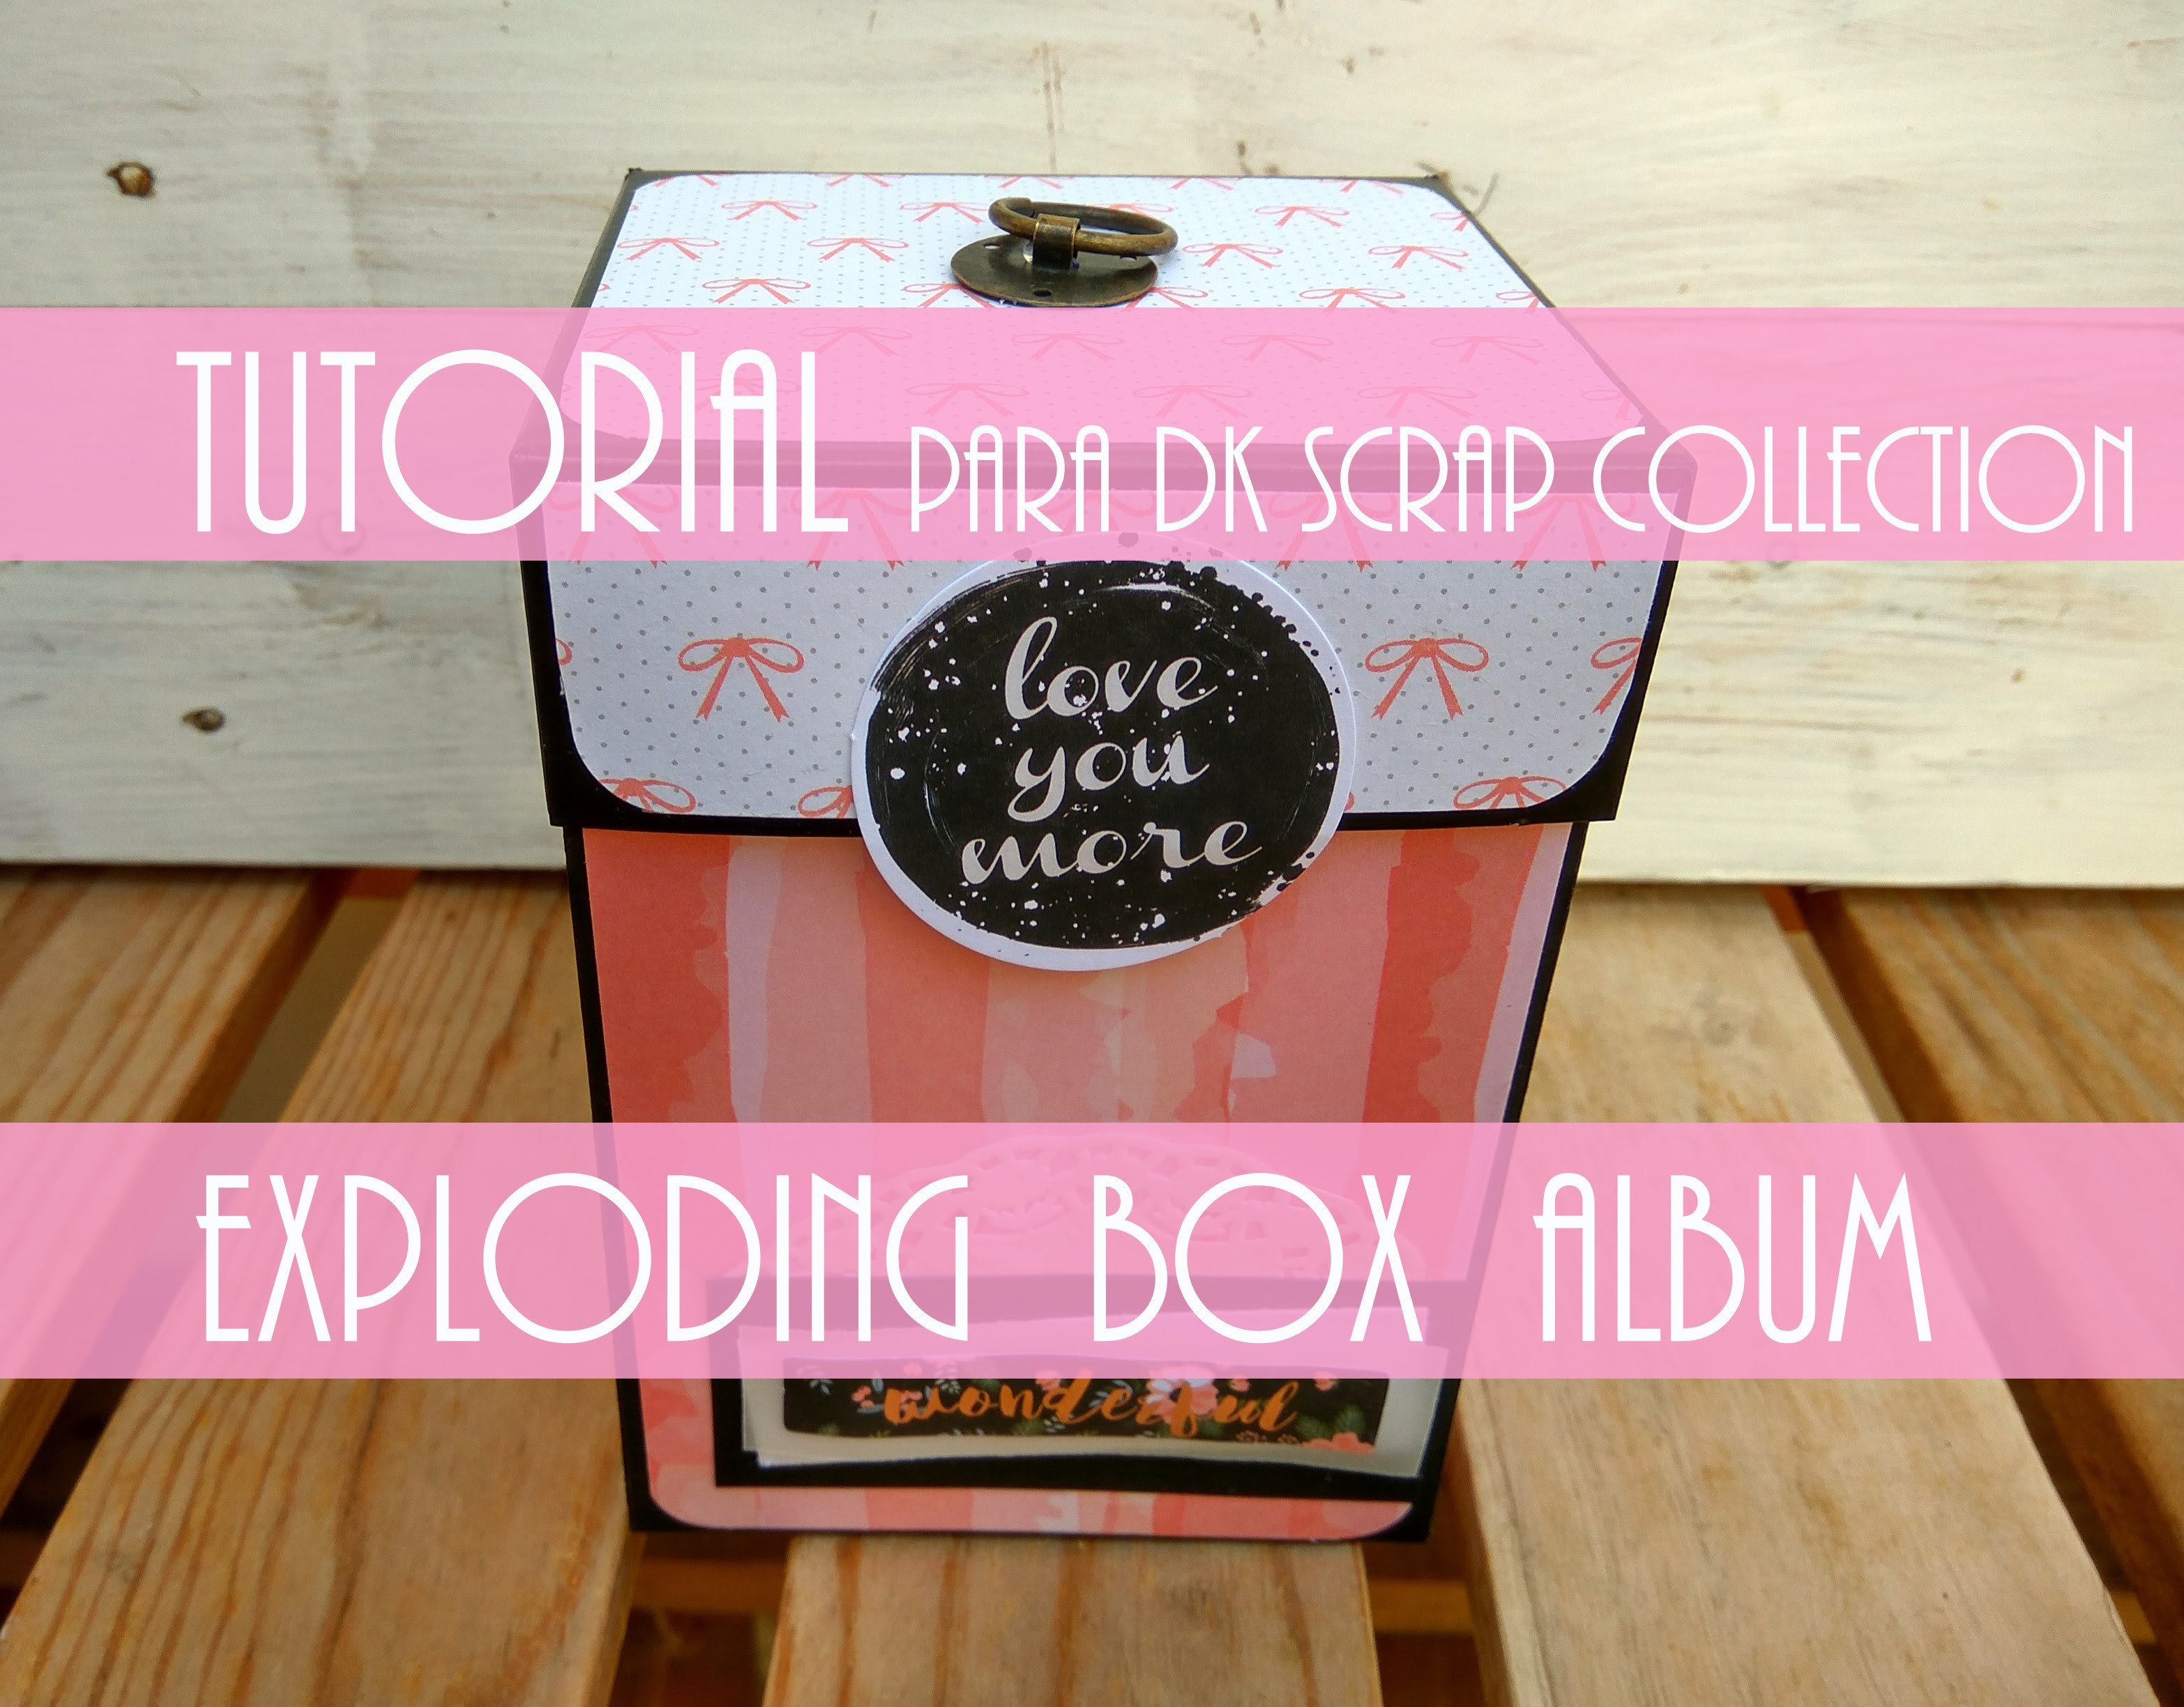 EXPLODING BOX ALBUM "Reciclada" para DK Scrap Collection